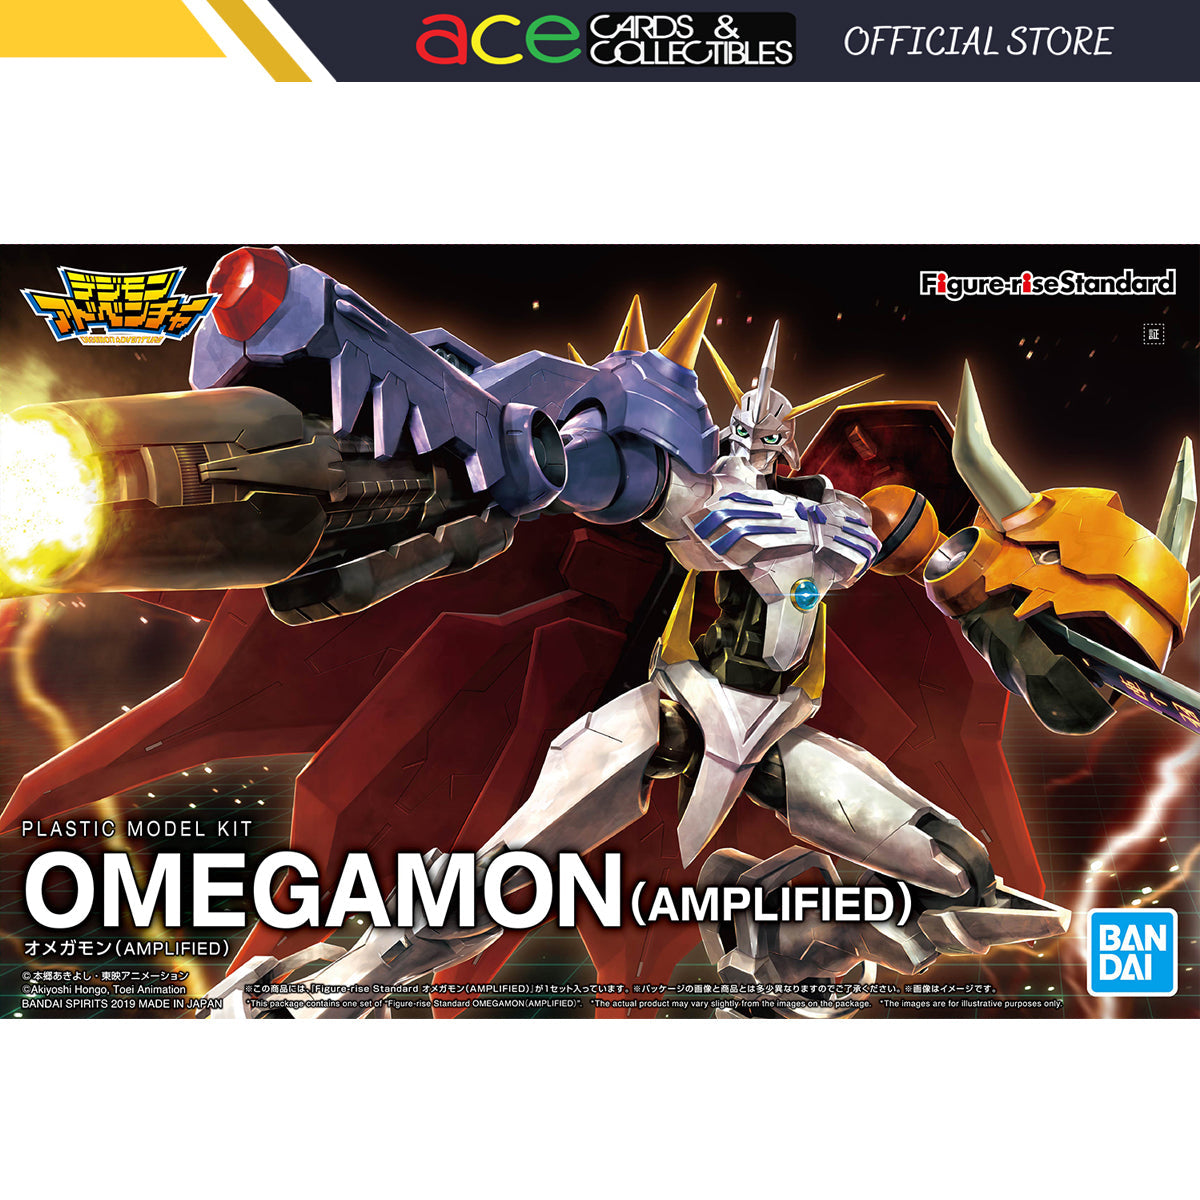 Digimon Figure-rise Standard Omegamon (Amplified) - Ace Cards